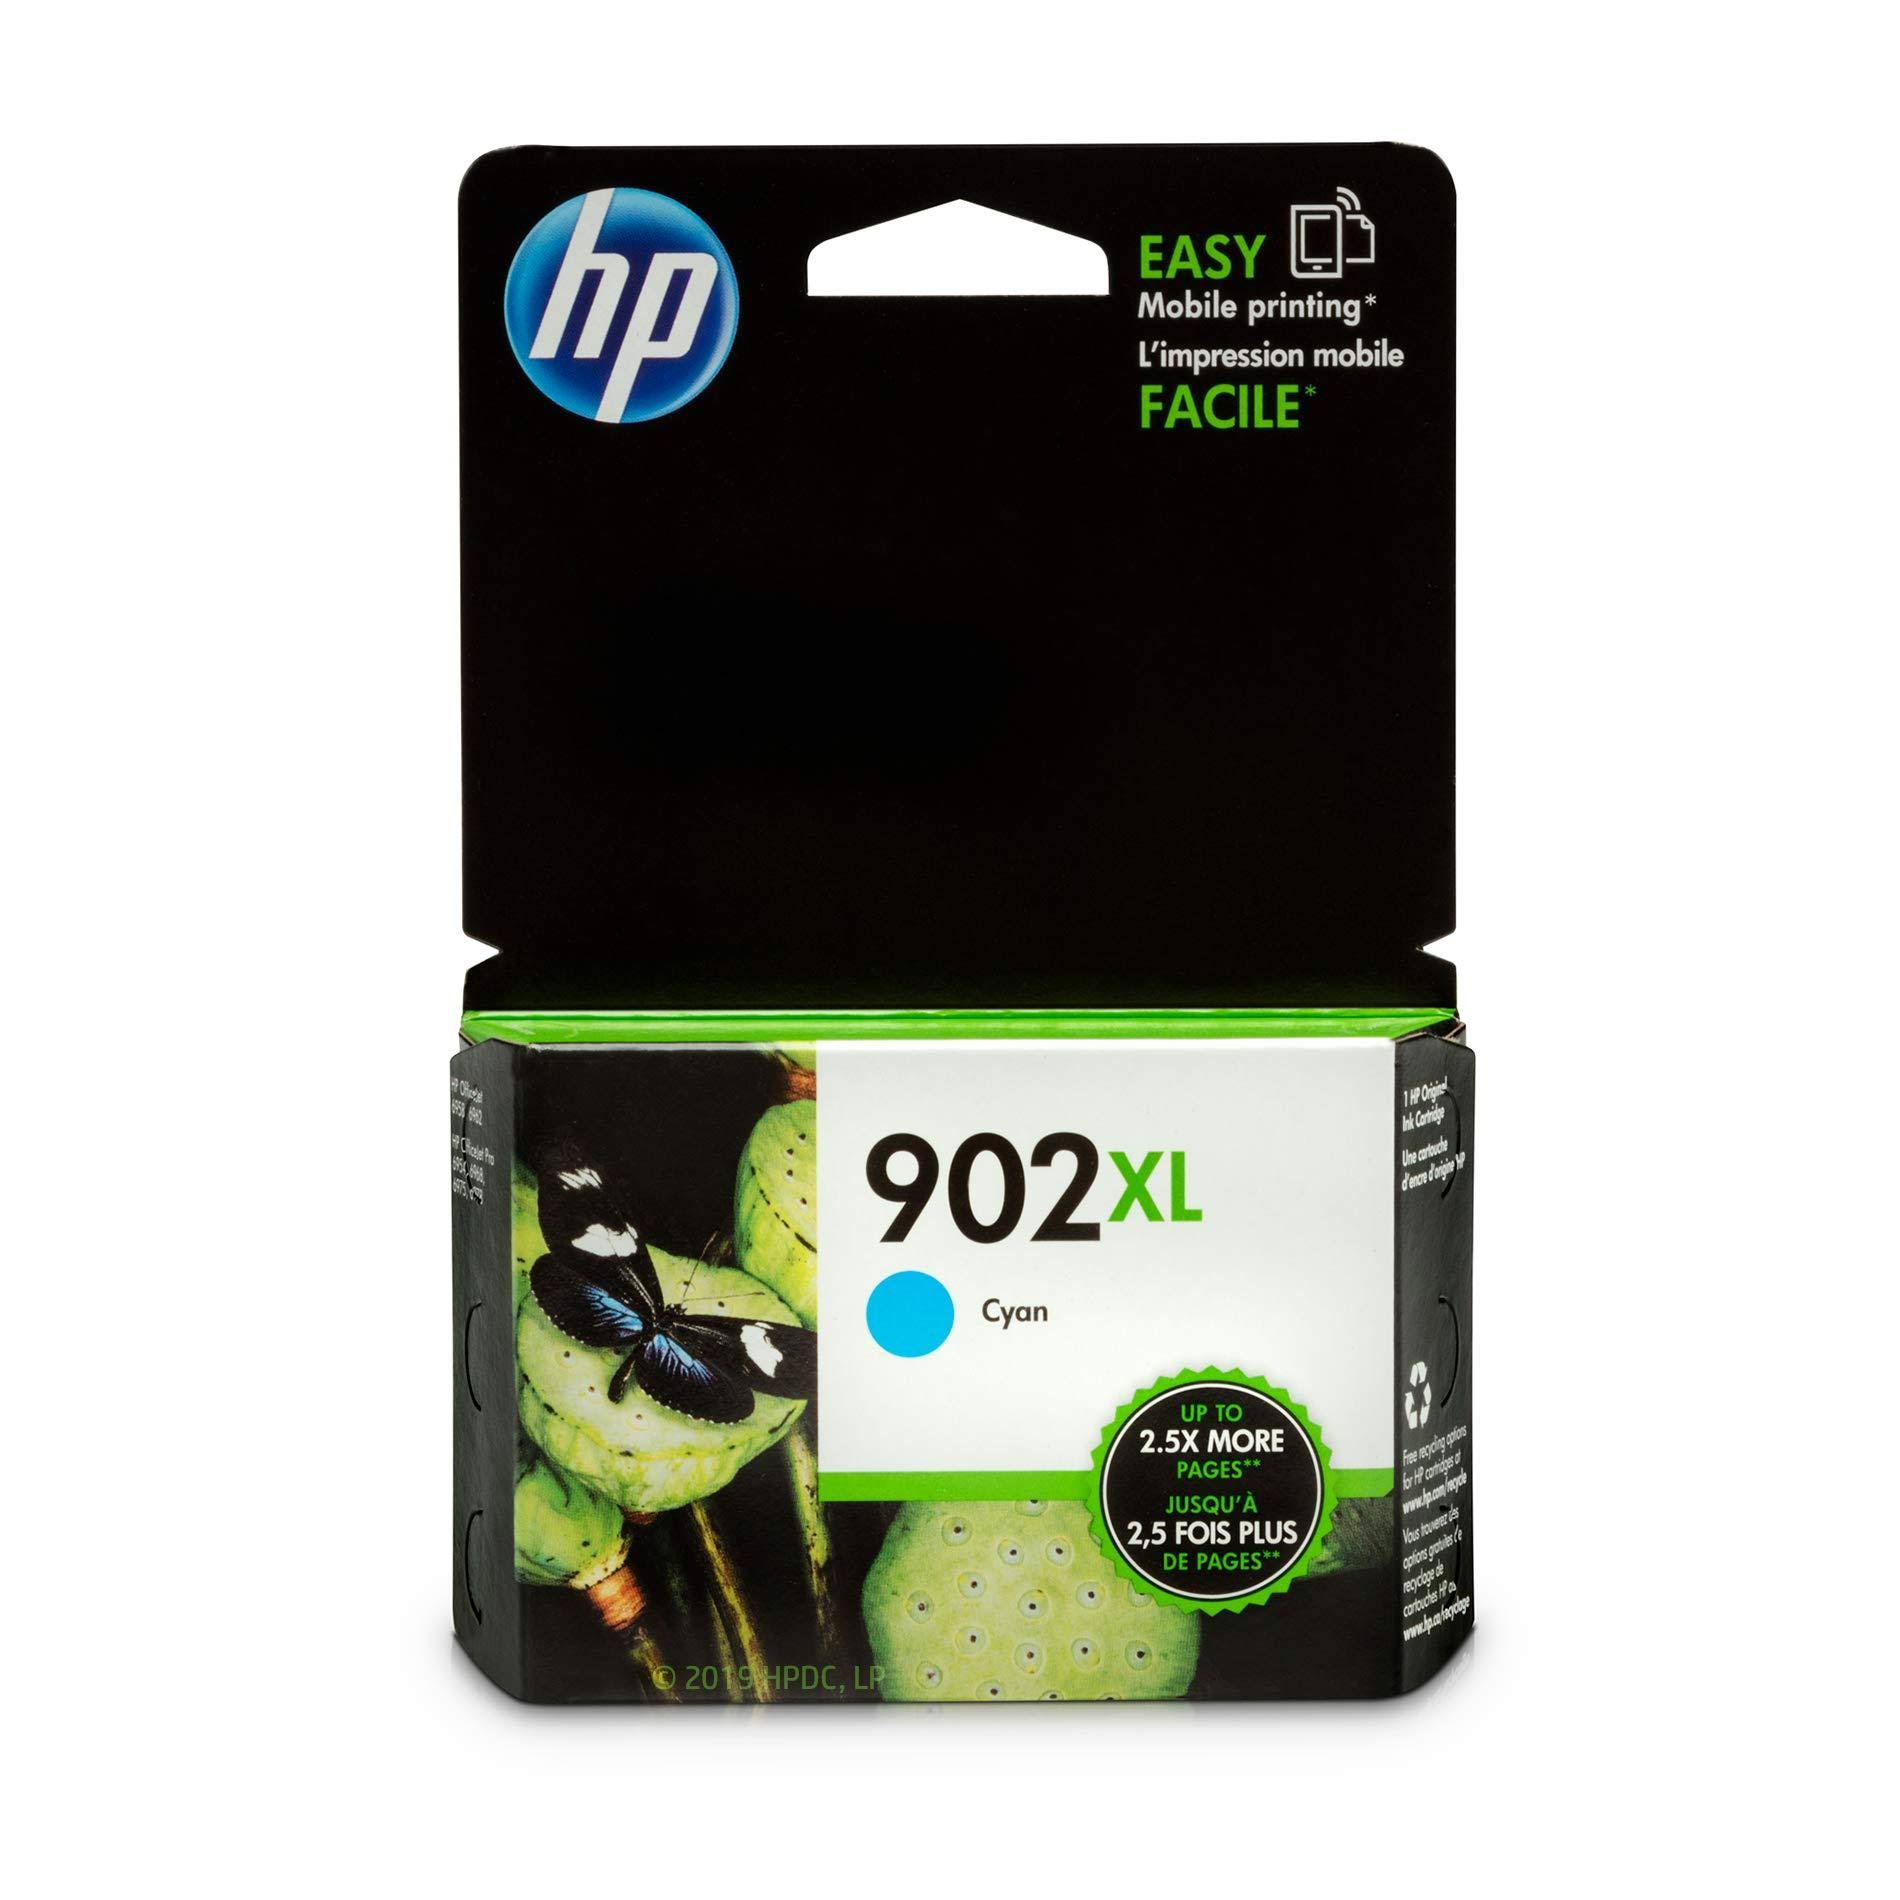 HP 903XL Ink Cartridge - Cyan, High-Yield